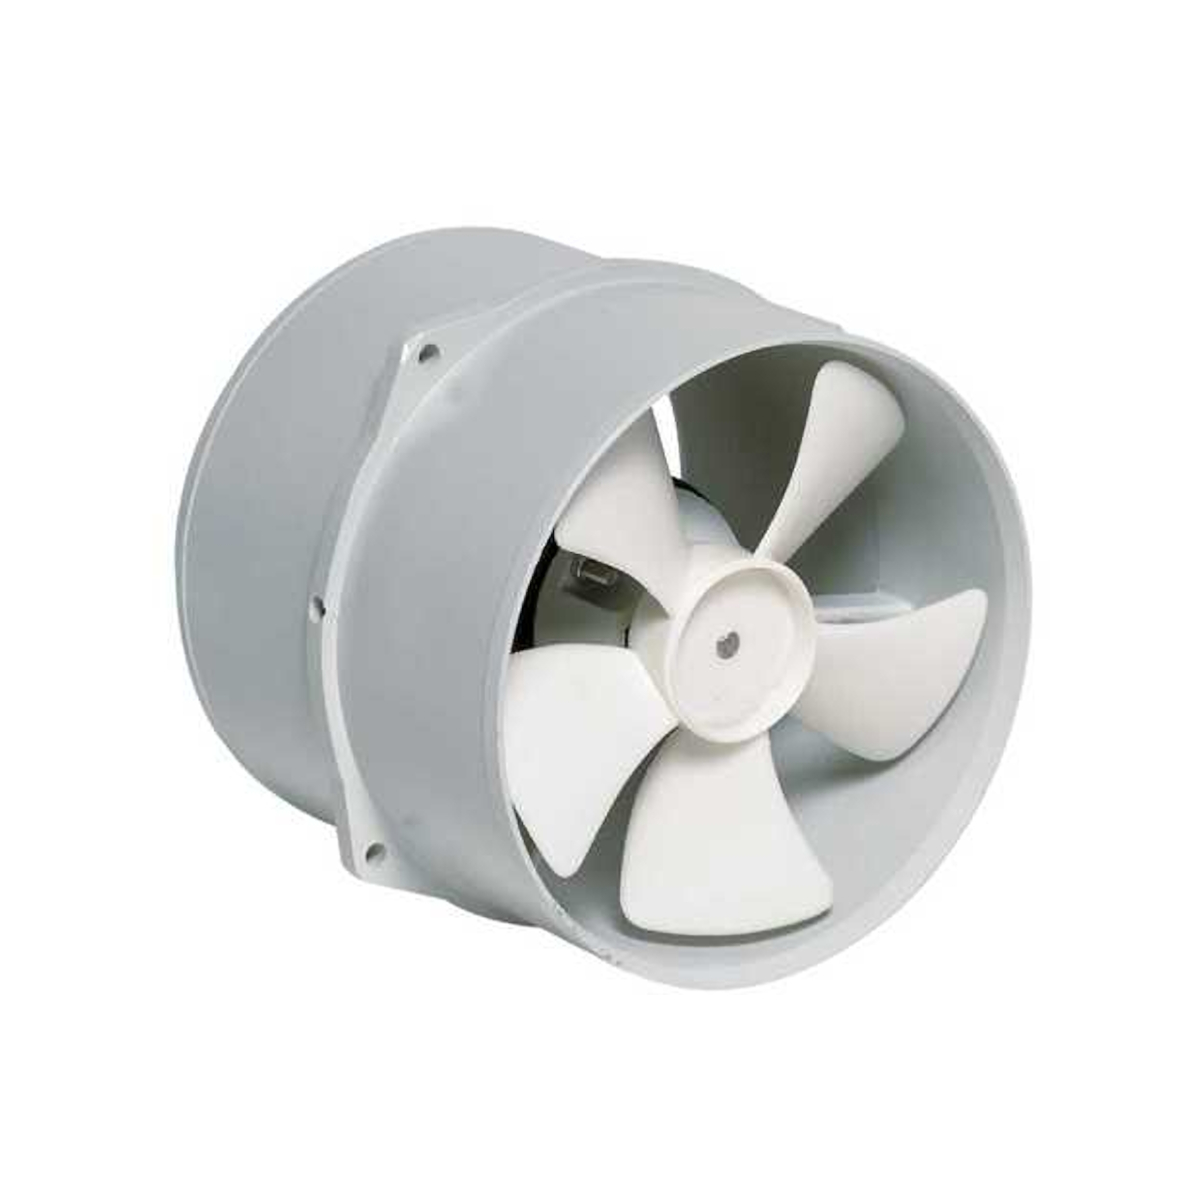 Vetus ventilateur-extracteur en ligne 24 v - ø178 mm